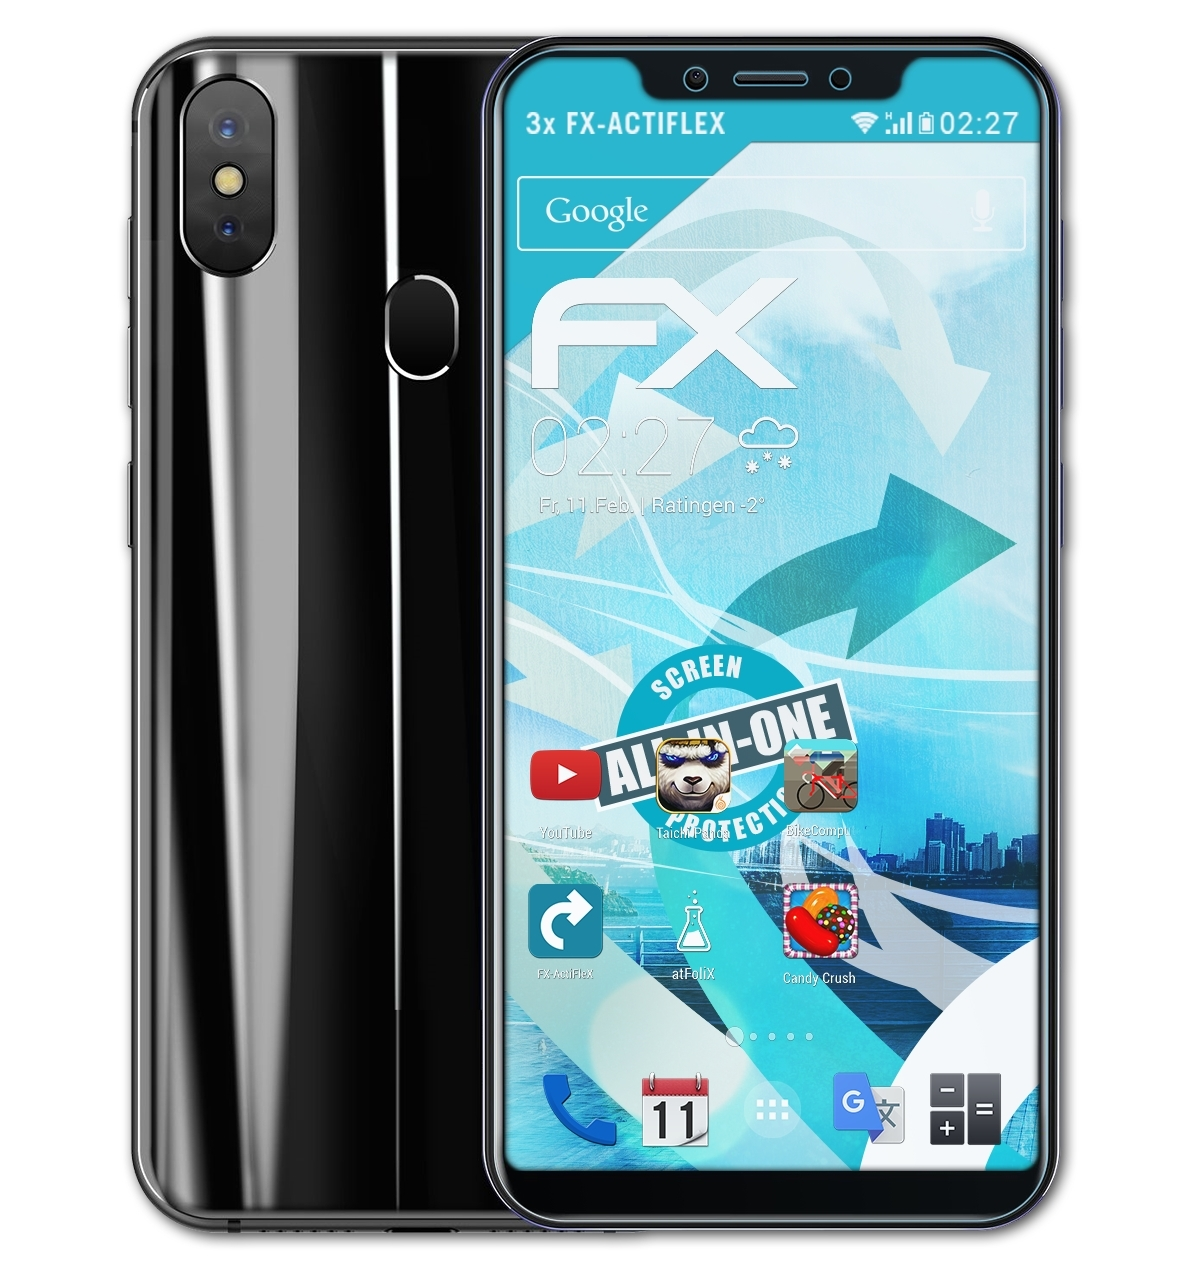 3x FX-ActiFleX Leagoo S9) Displayschutz(für ATFOLIX